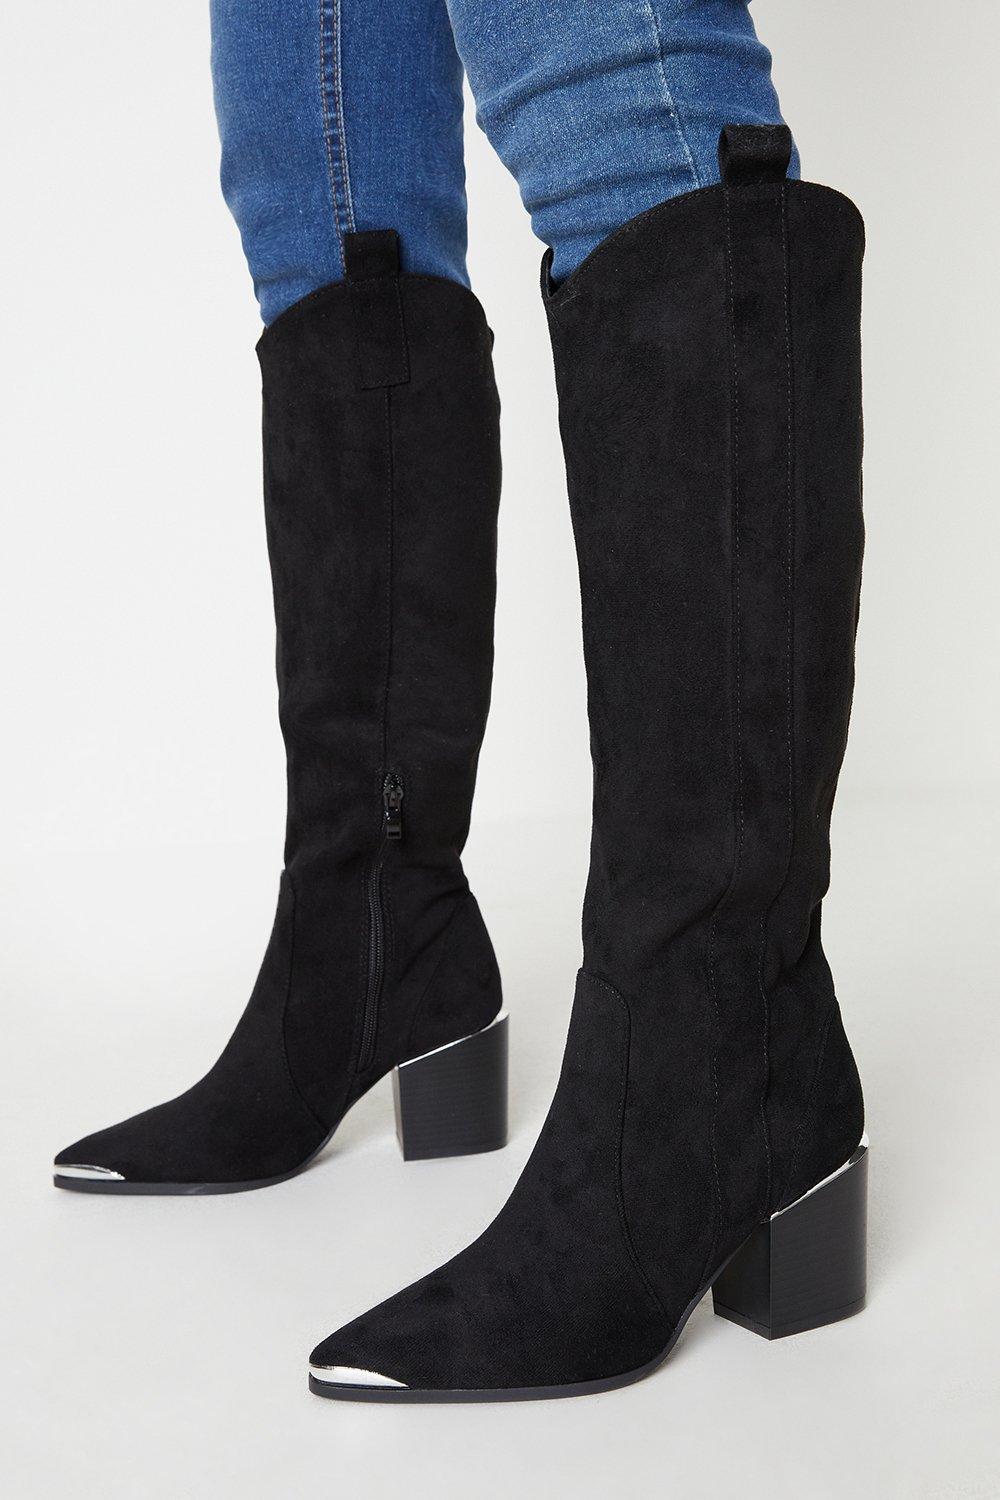 Women's Konka Toe Cap Knee High Boots - black - 4